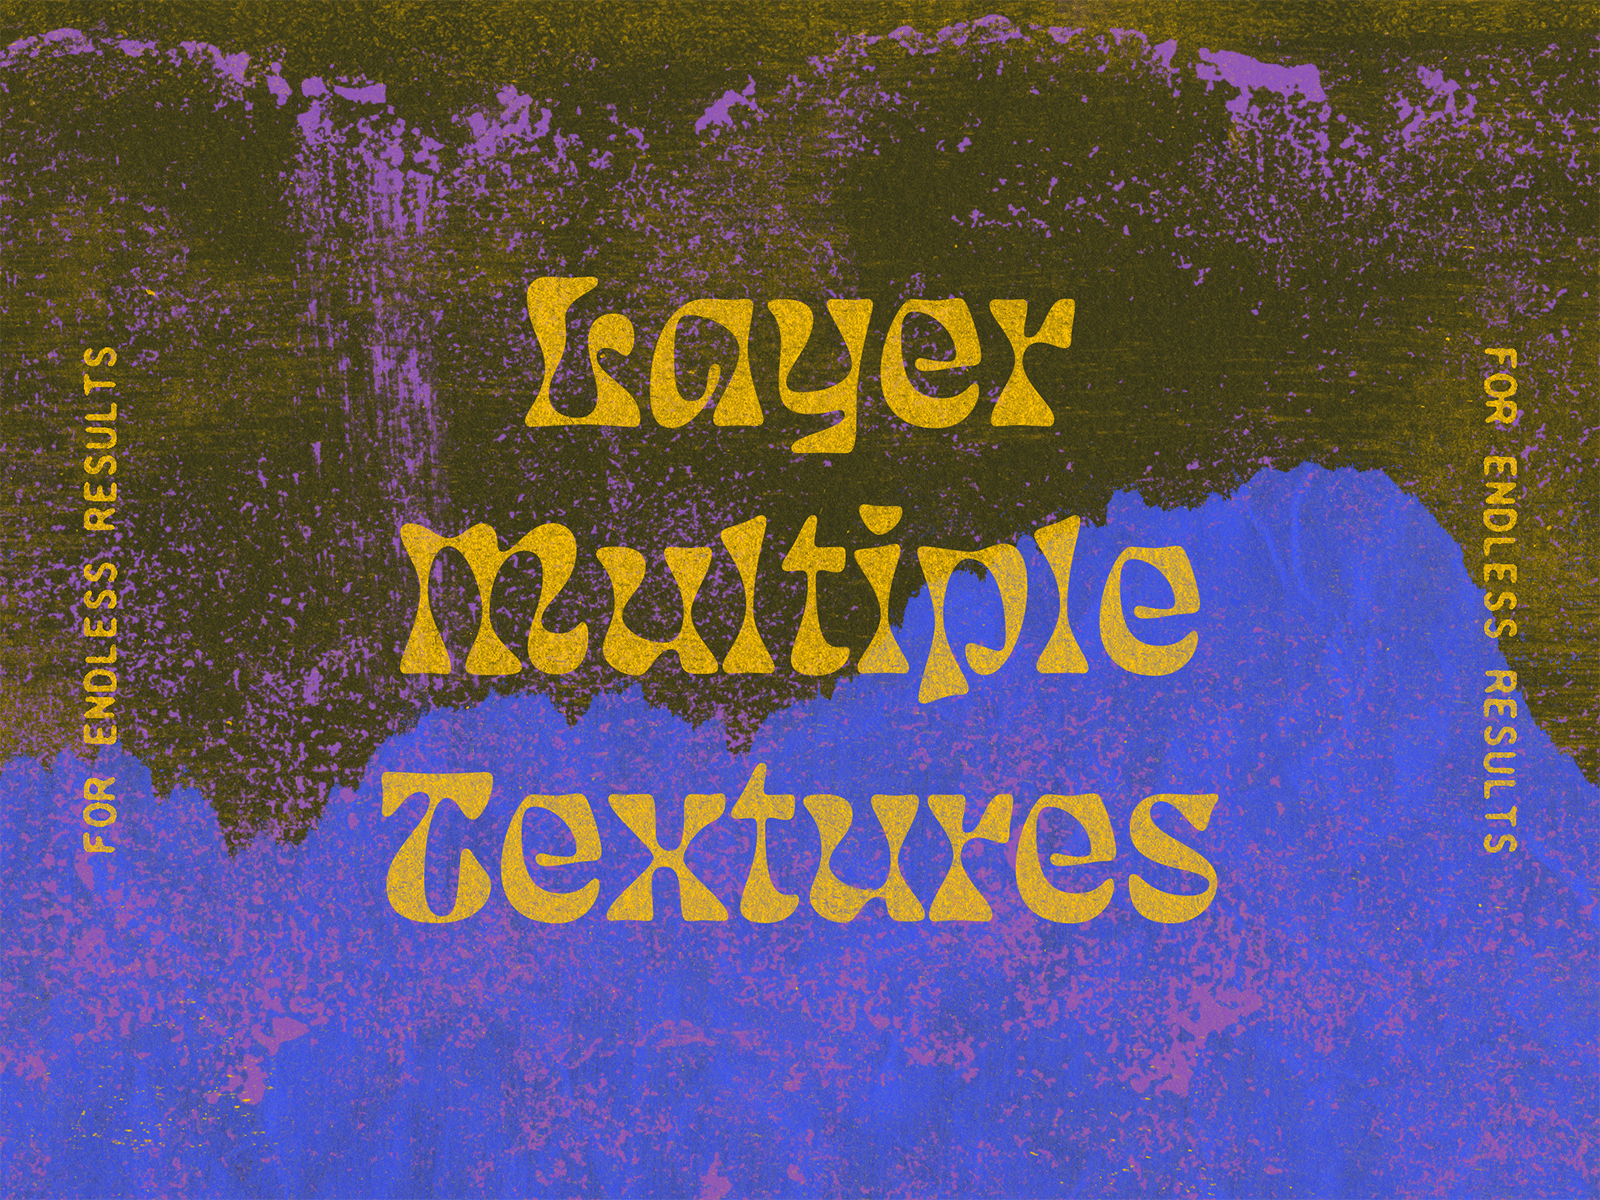 Black Paint - Layer Multiple Textures